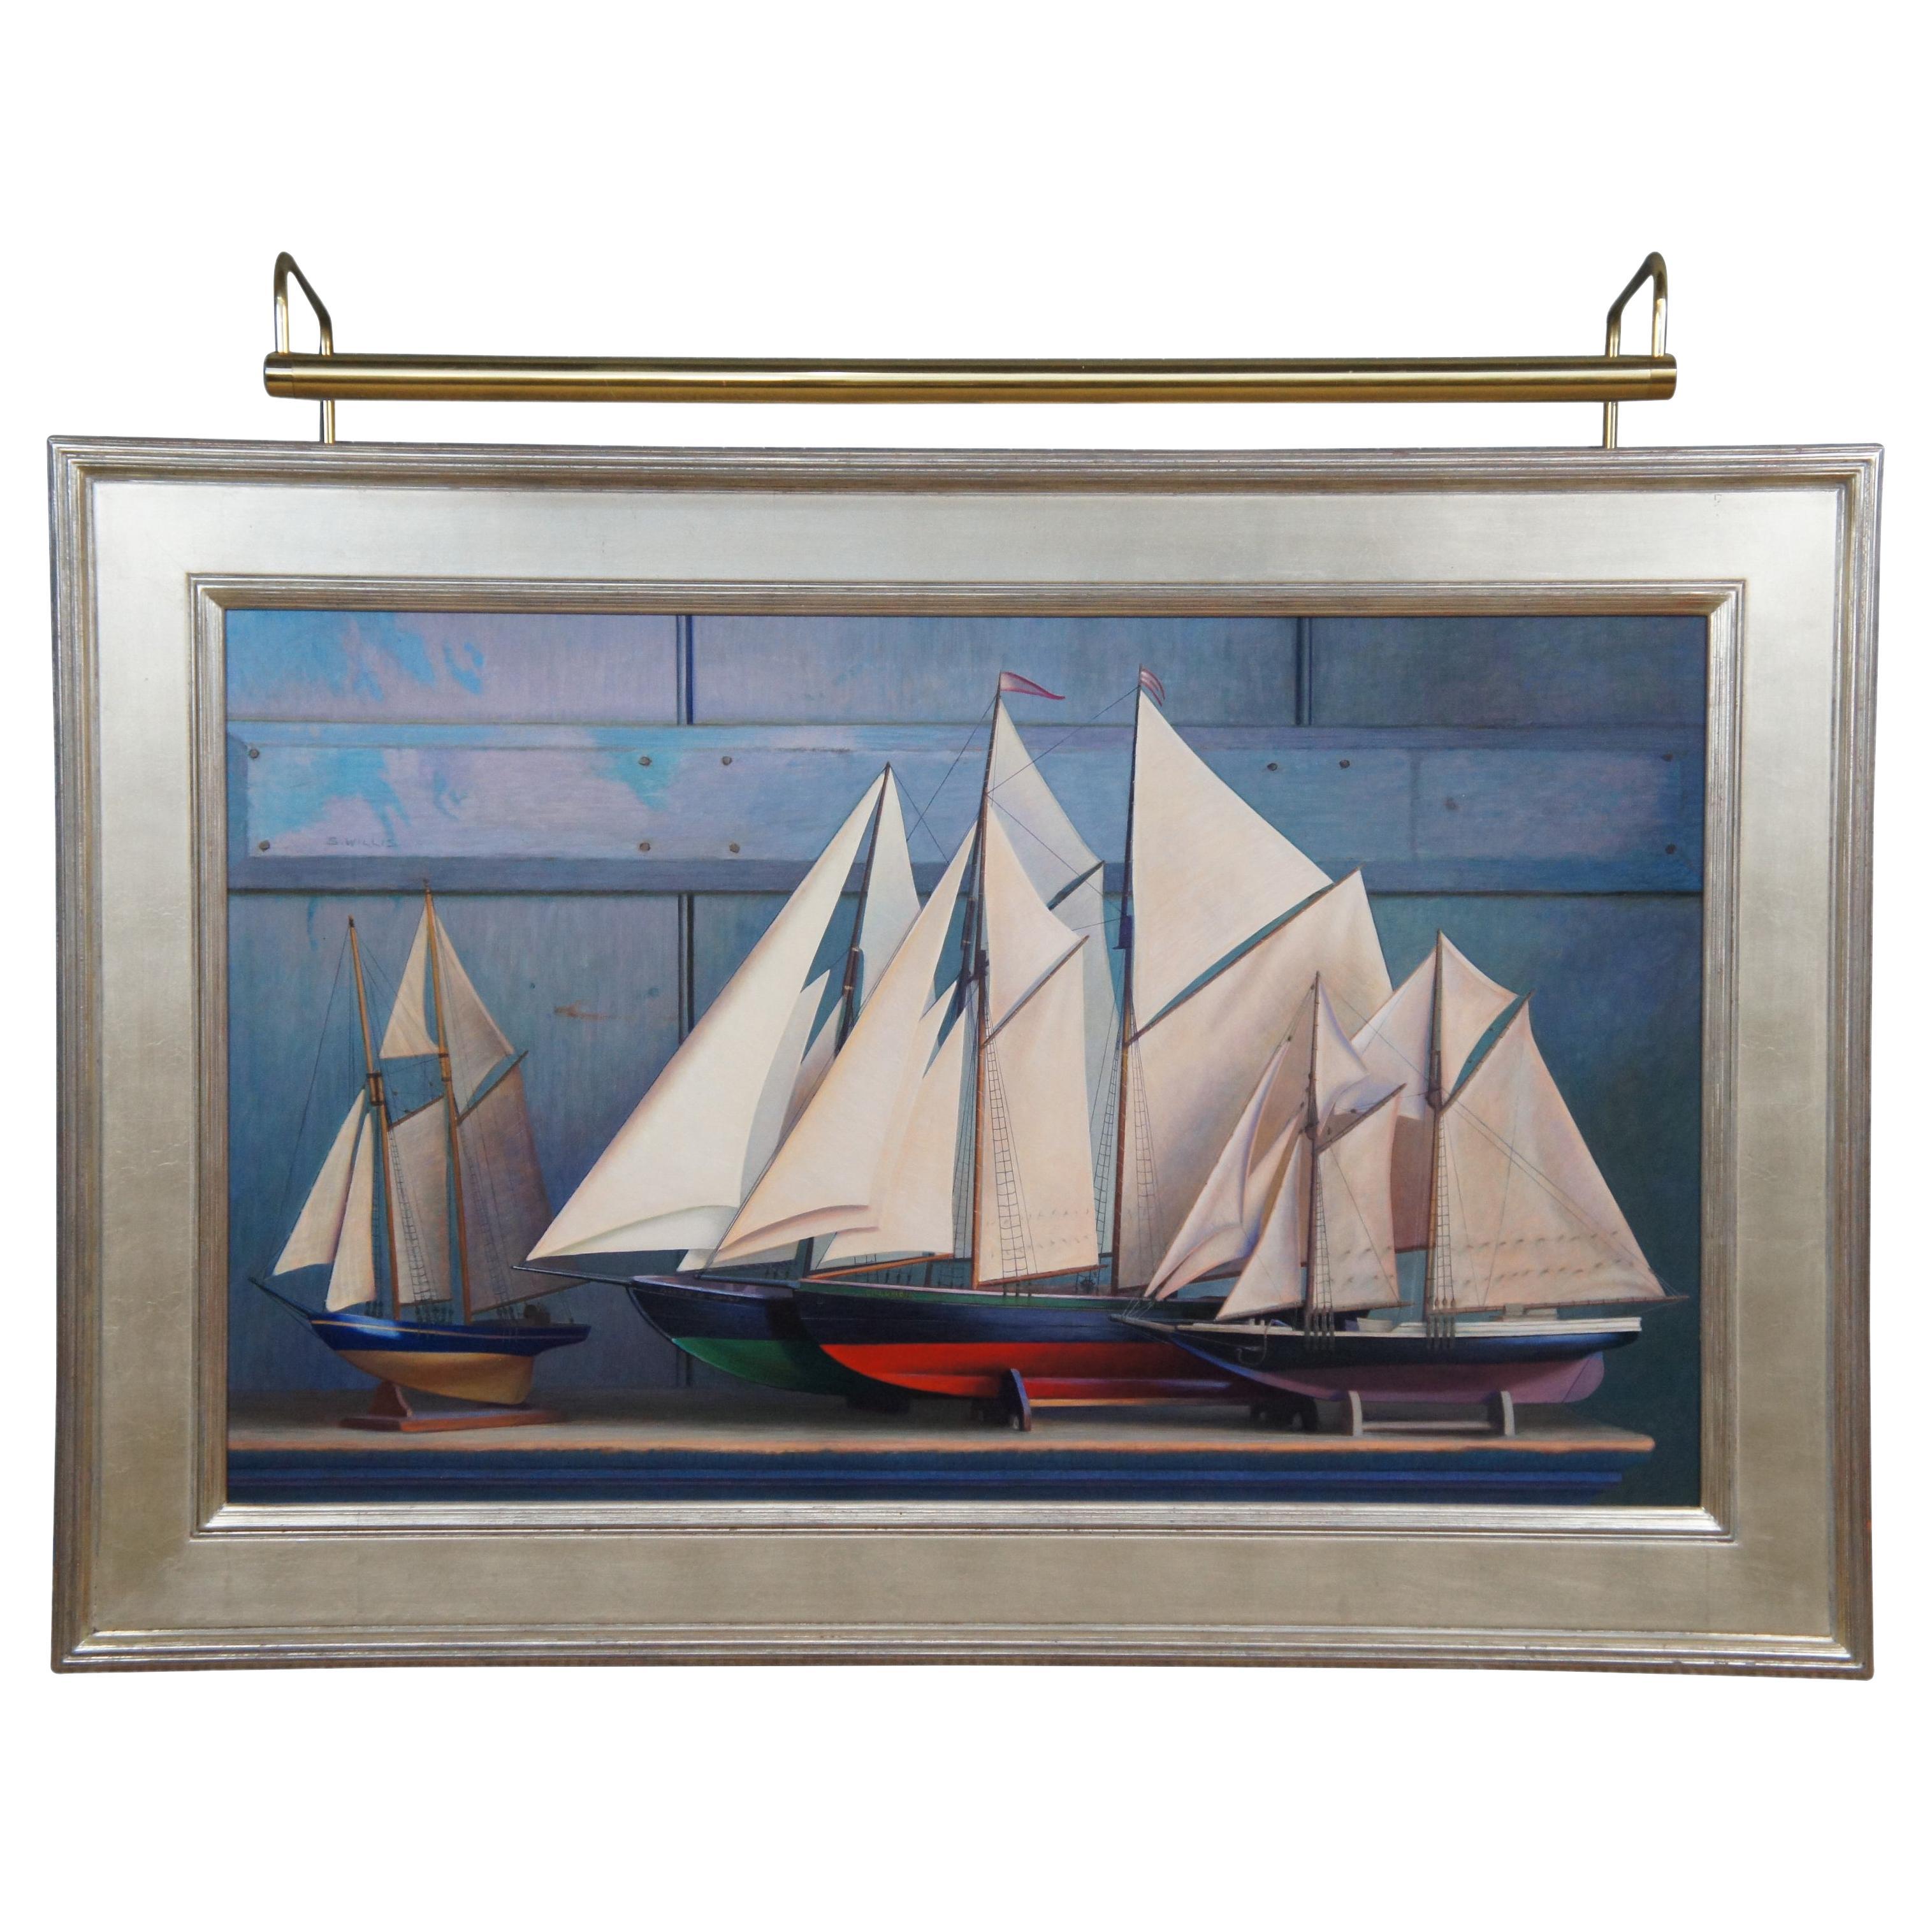 Sid Willis "Sails" Model Ship Still Life Maritime Oil Painting on Board Framed